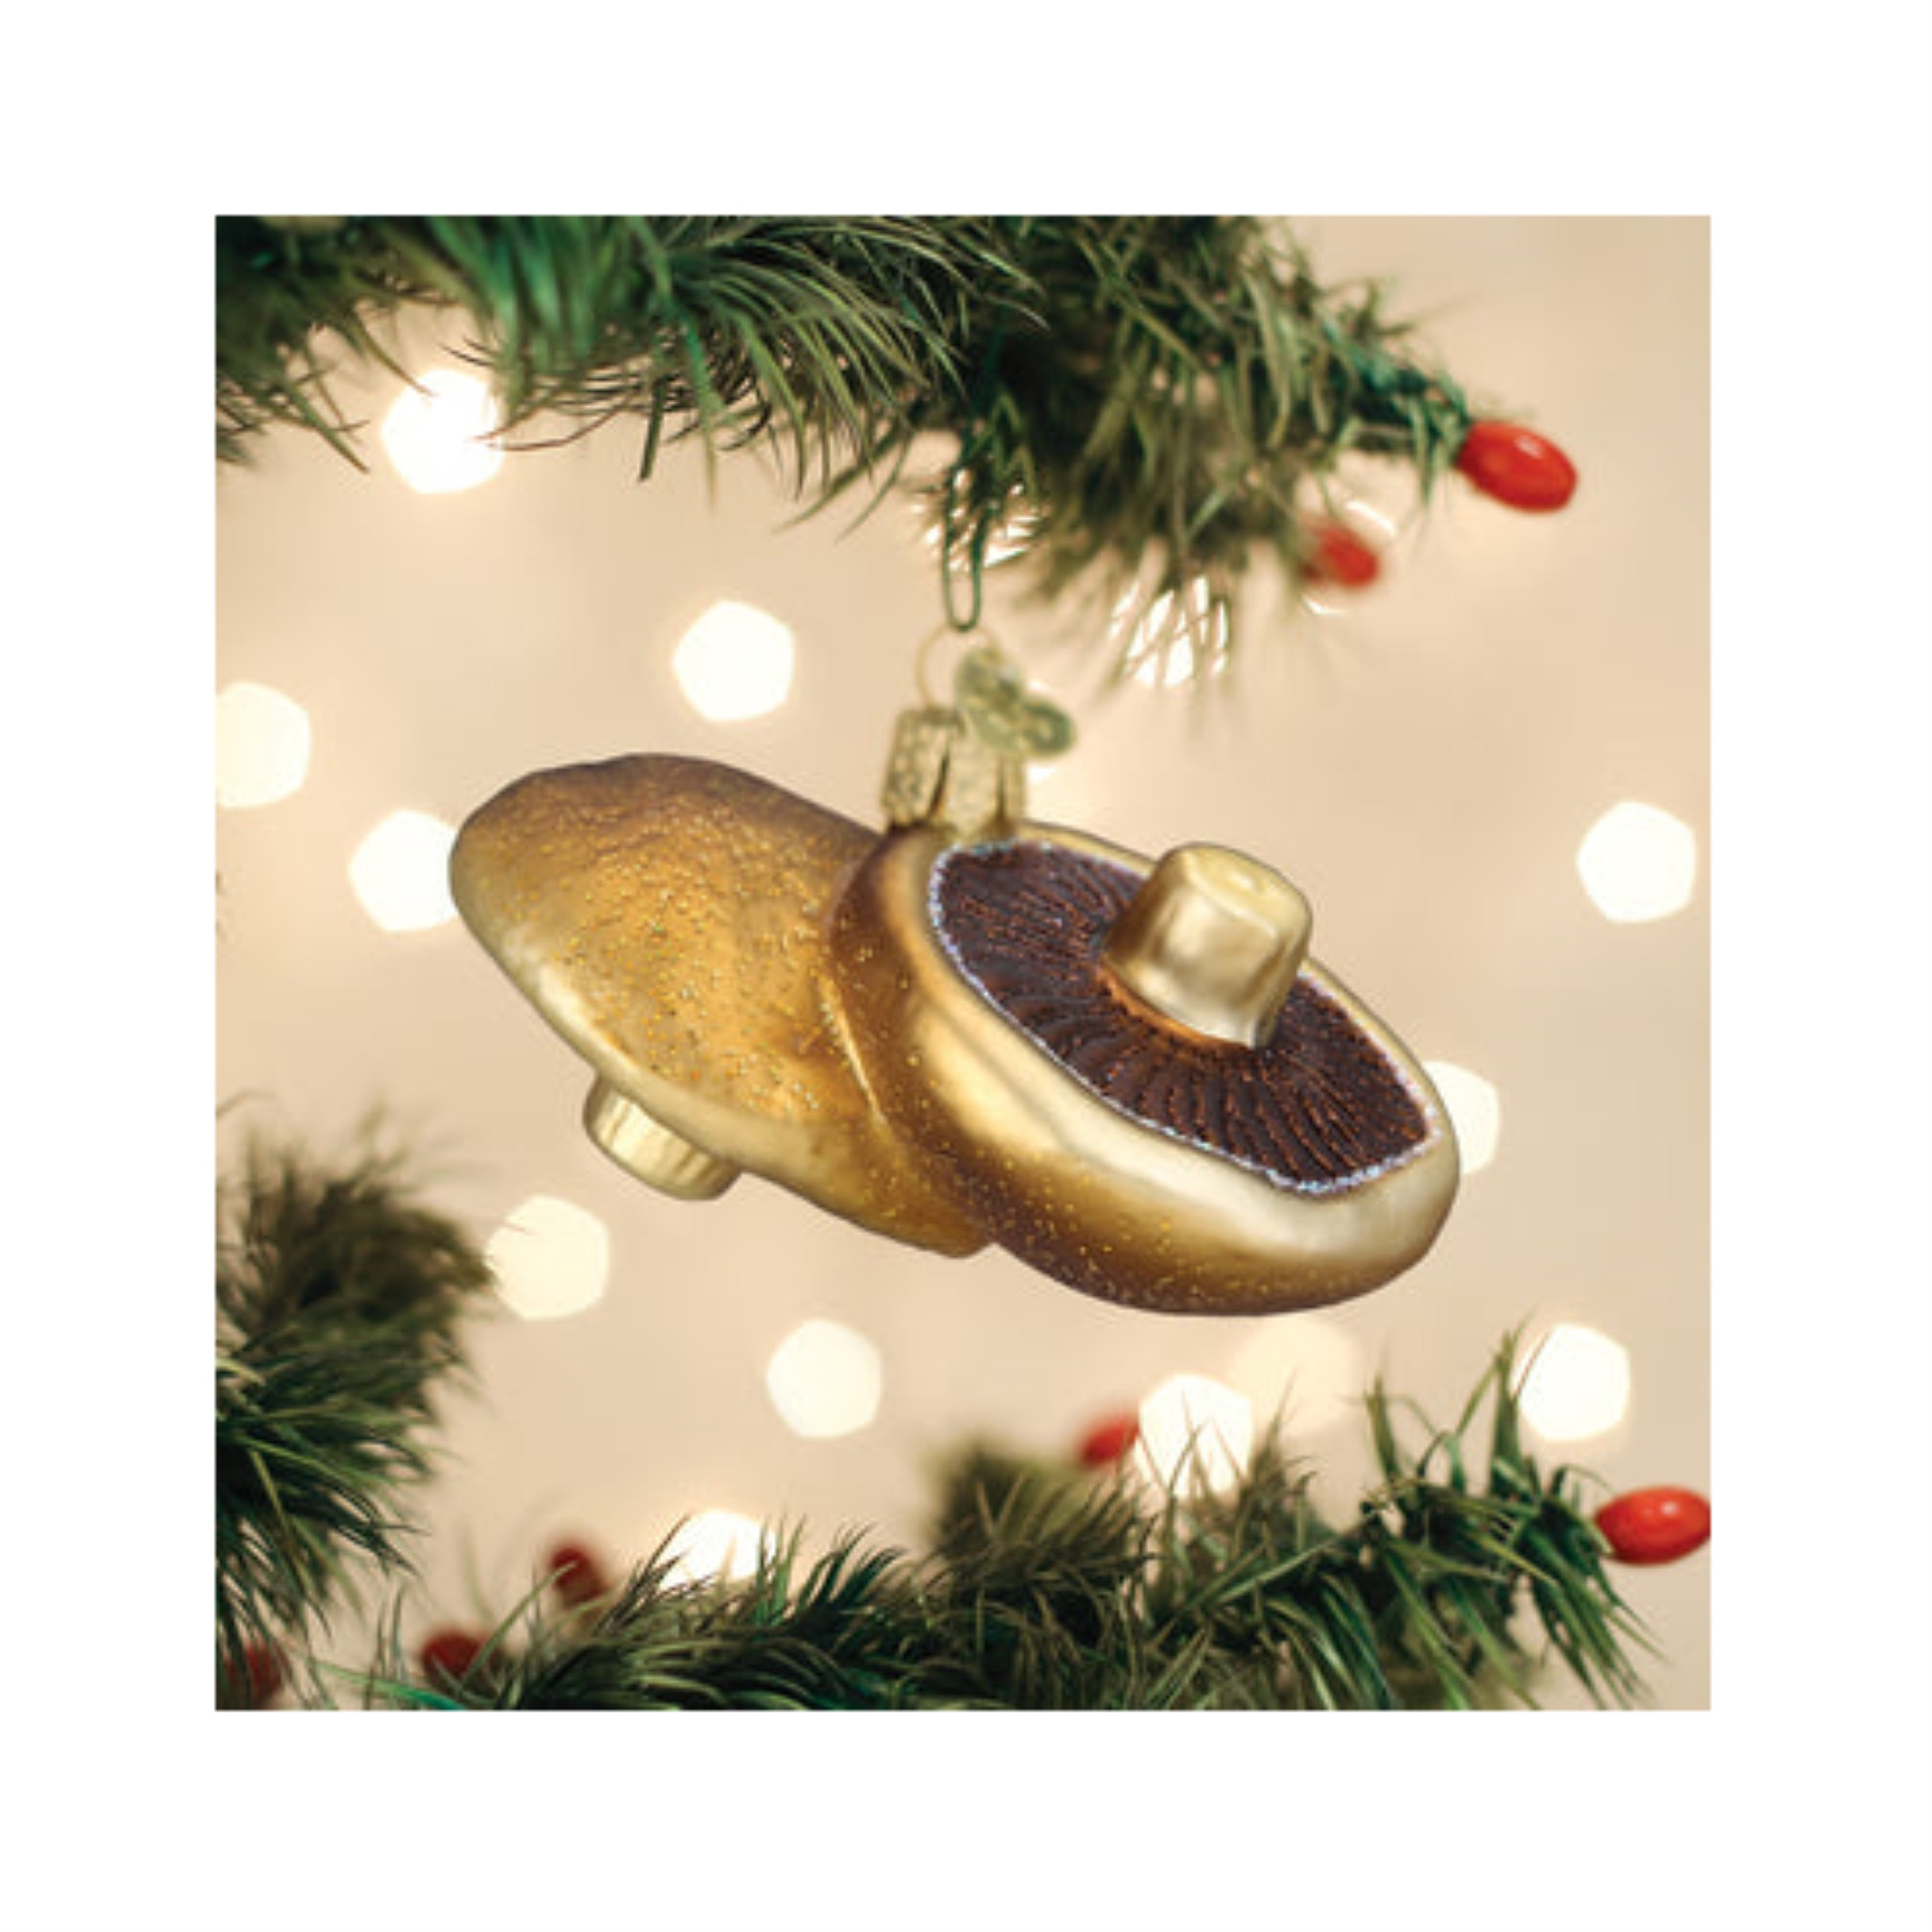 Old World Christmas Glass Blown Ornament, Portobello Mushrooms (With OWC Gift Box)